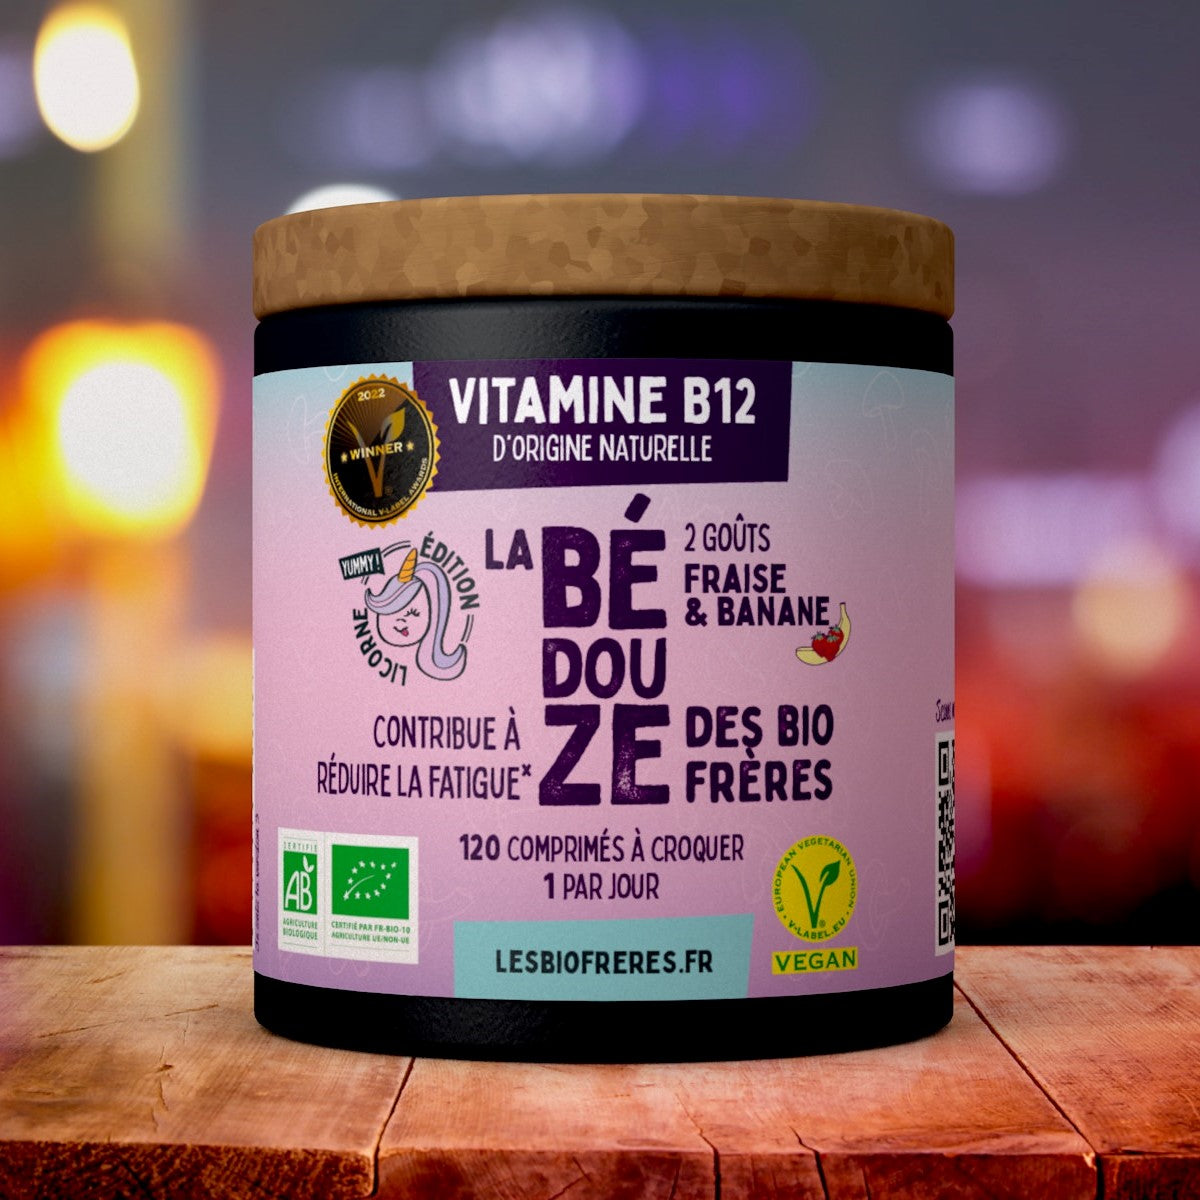 Vitamine B12 Goût Framboise La Bédouze - Les Bio Frères